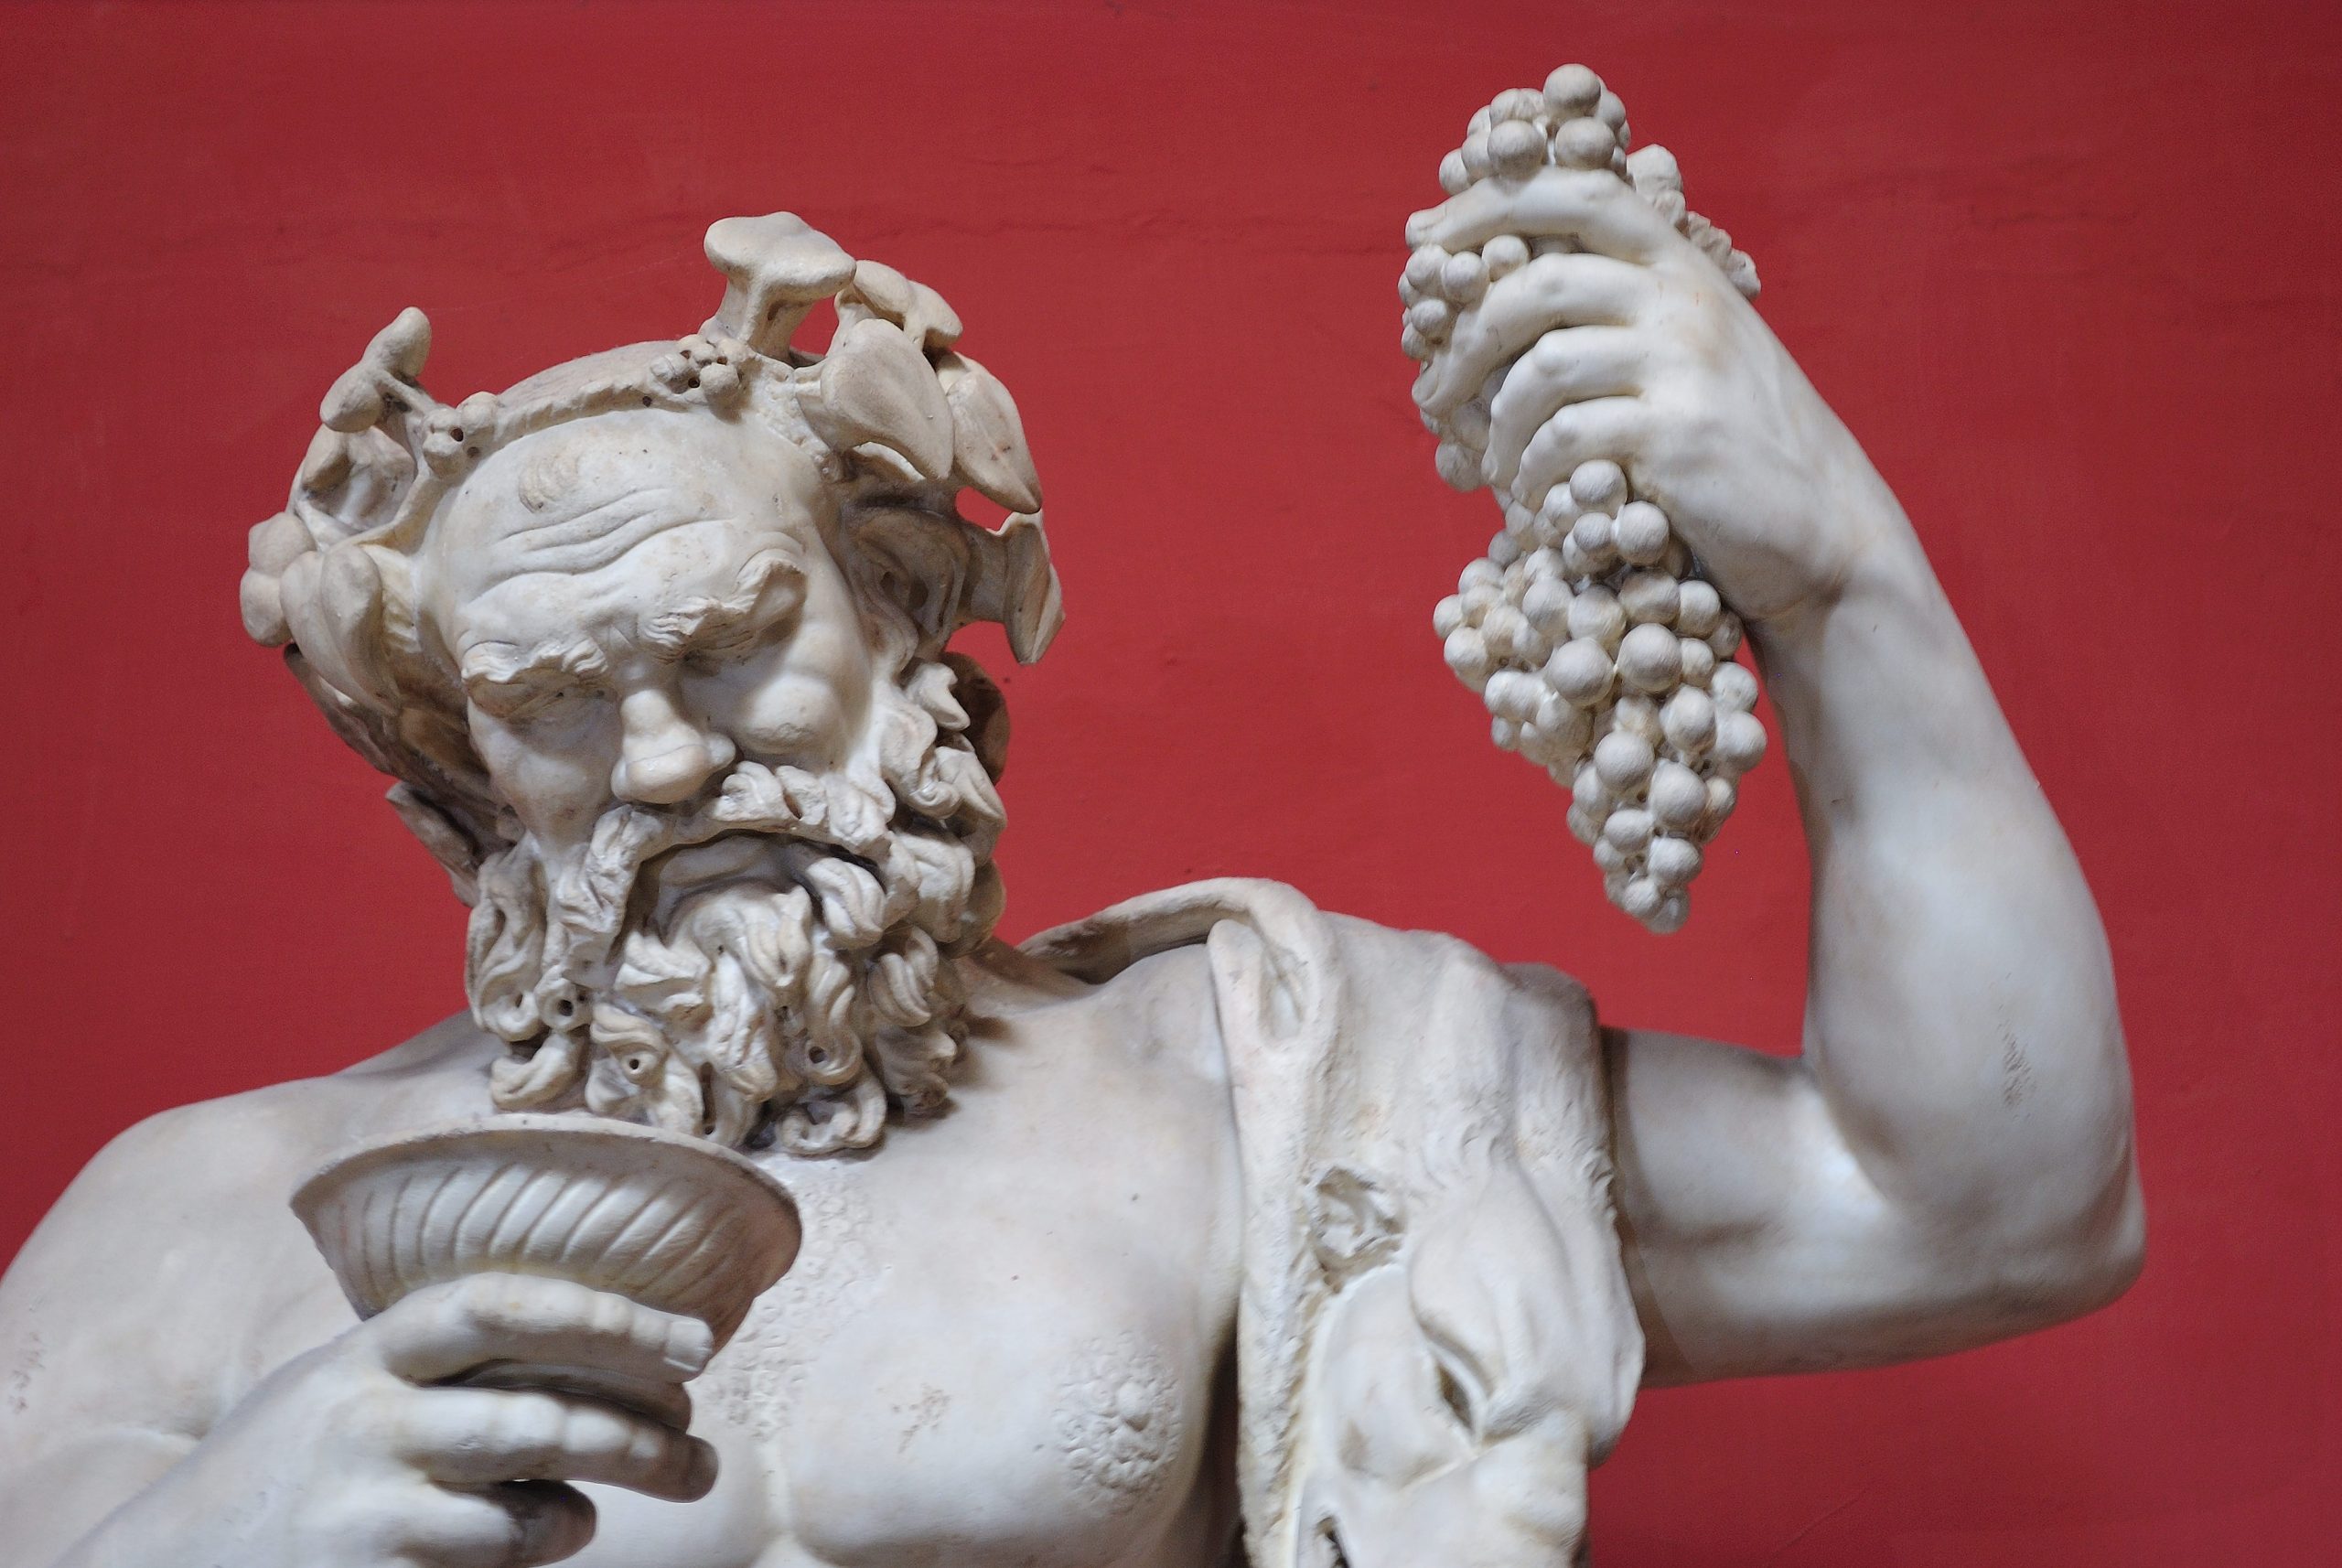 Dionysus – Greek Mythological God of Wine